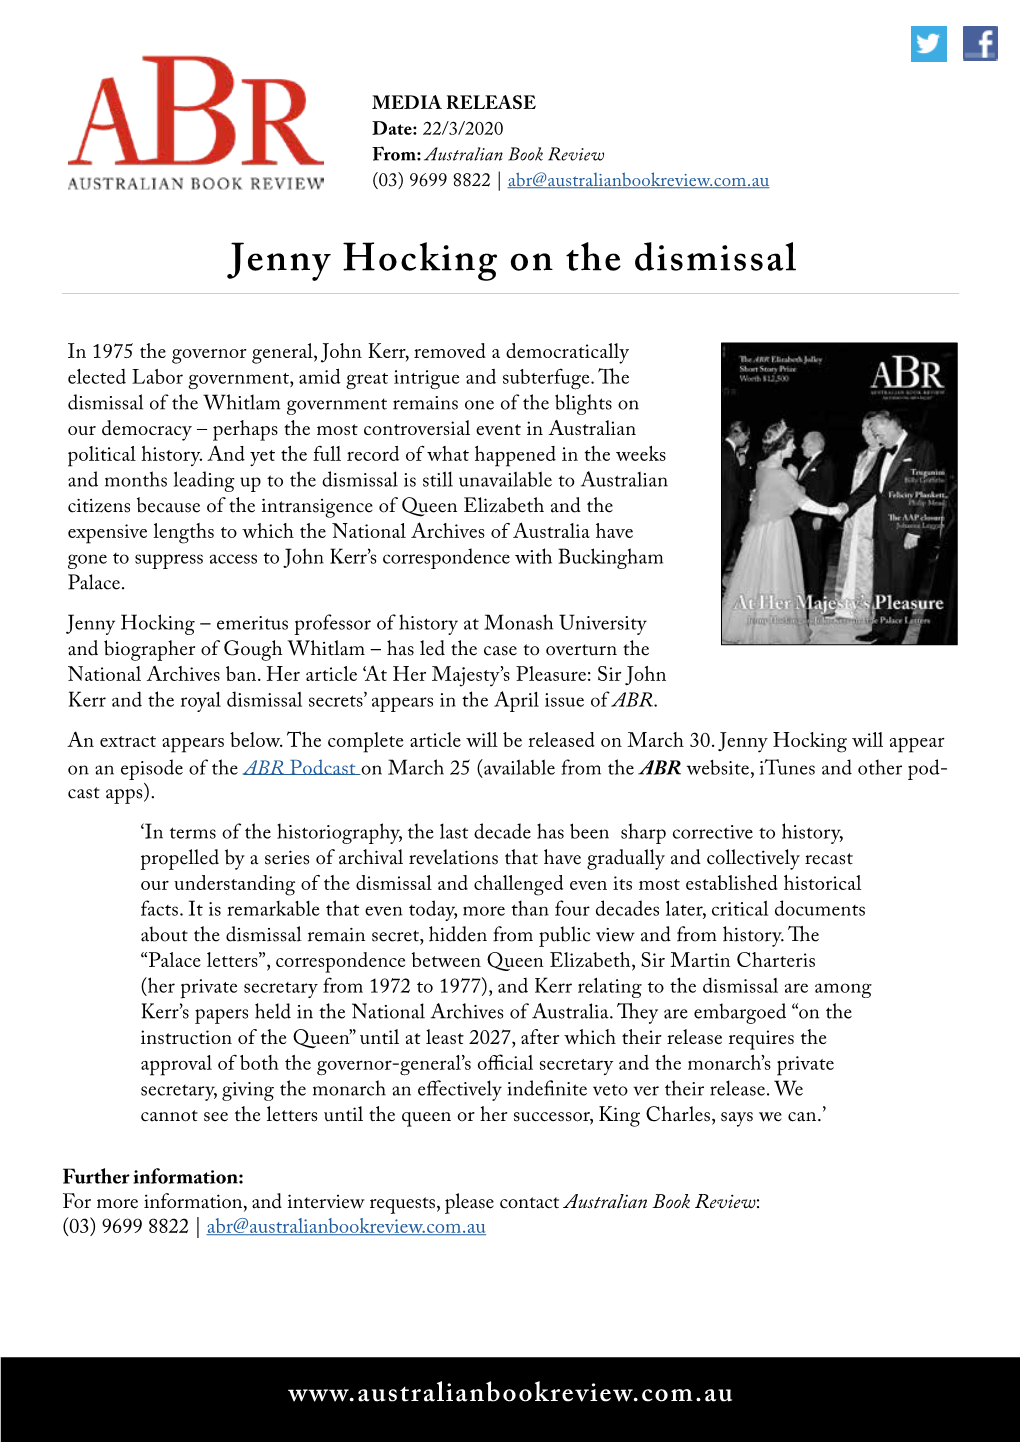 Jenny Hocking on the Dismissal